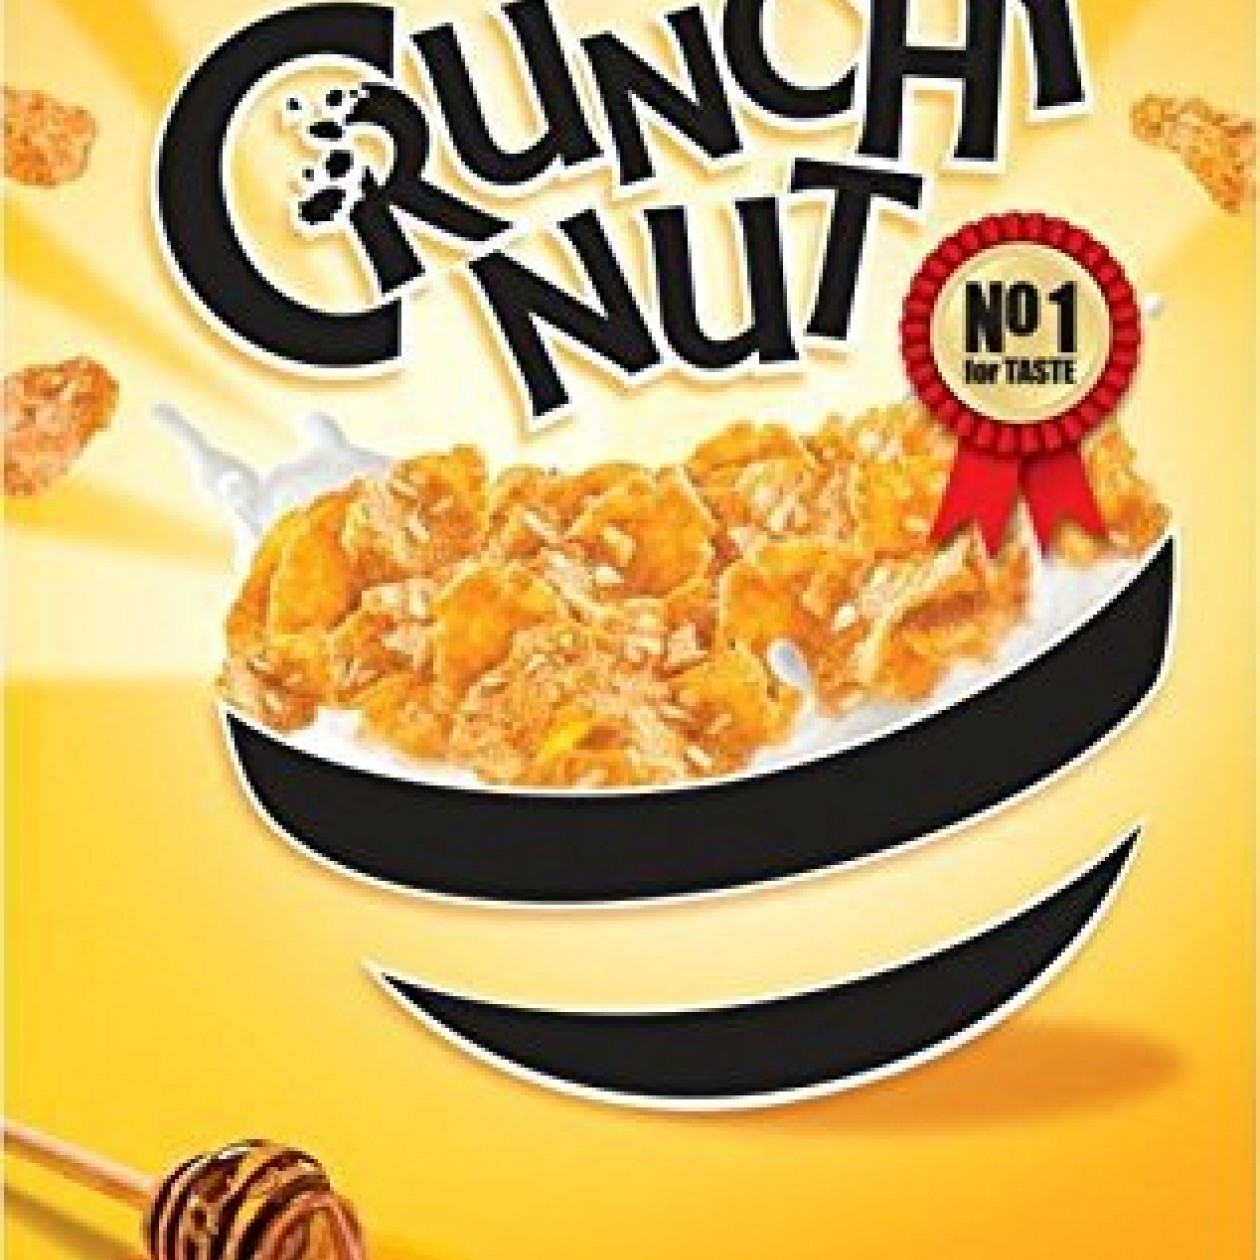 Kellogg’s Crunchy Nut Cornflakes 500g